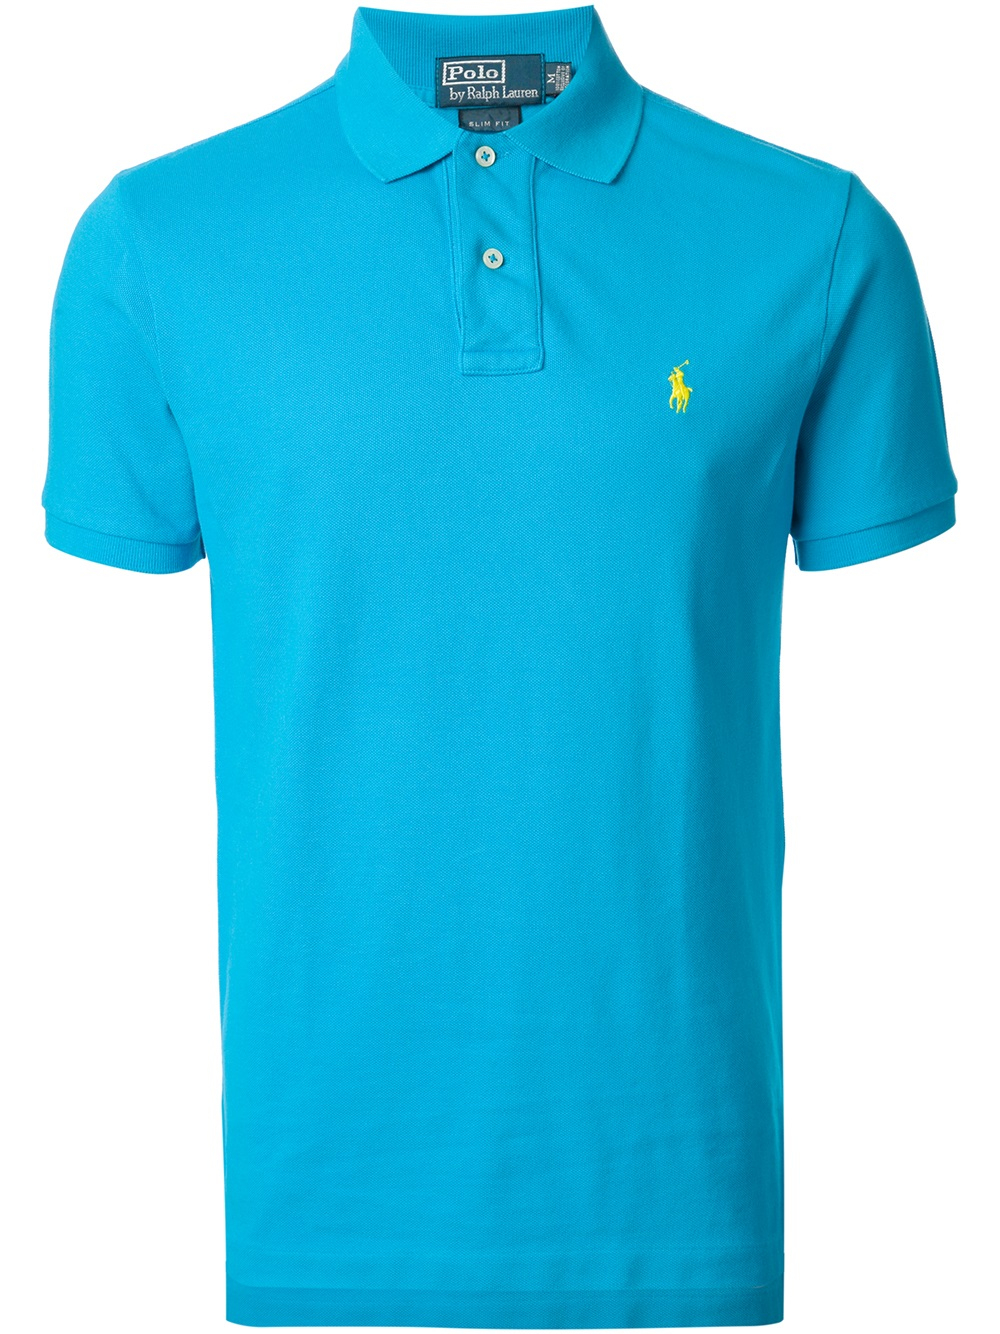 Polo Ralph Lauren Polo Shirt in Blue for Men - Lyst